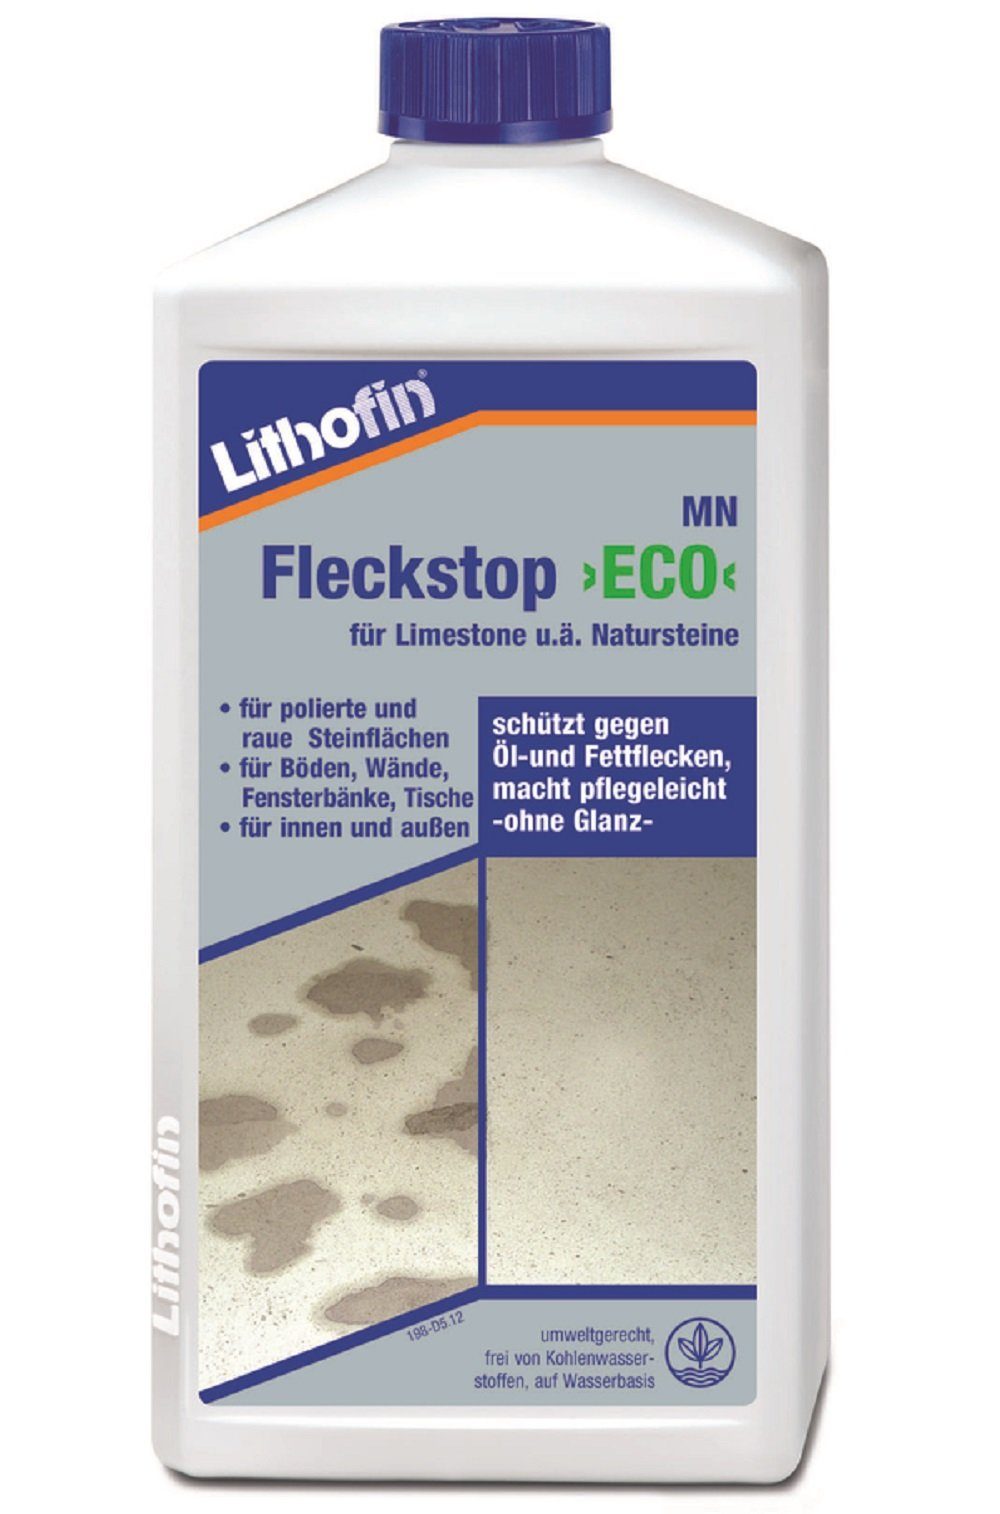 Lithofin LITHOFIN MN Fleckstop Eco, 1Ltr Naturstein-Reiniger